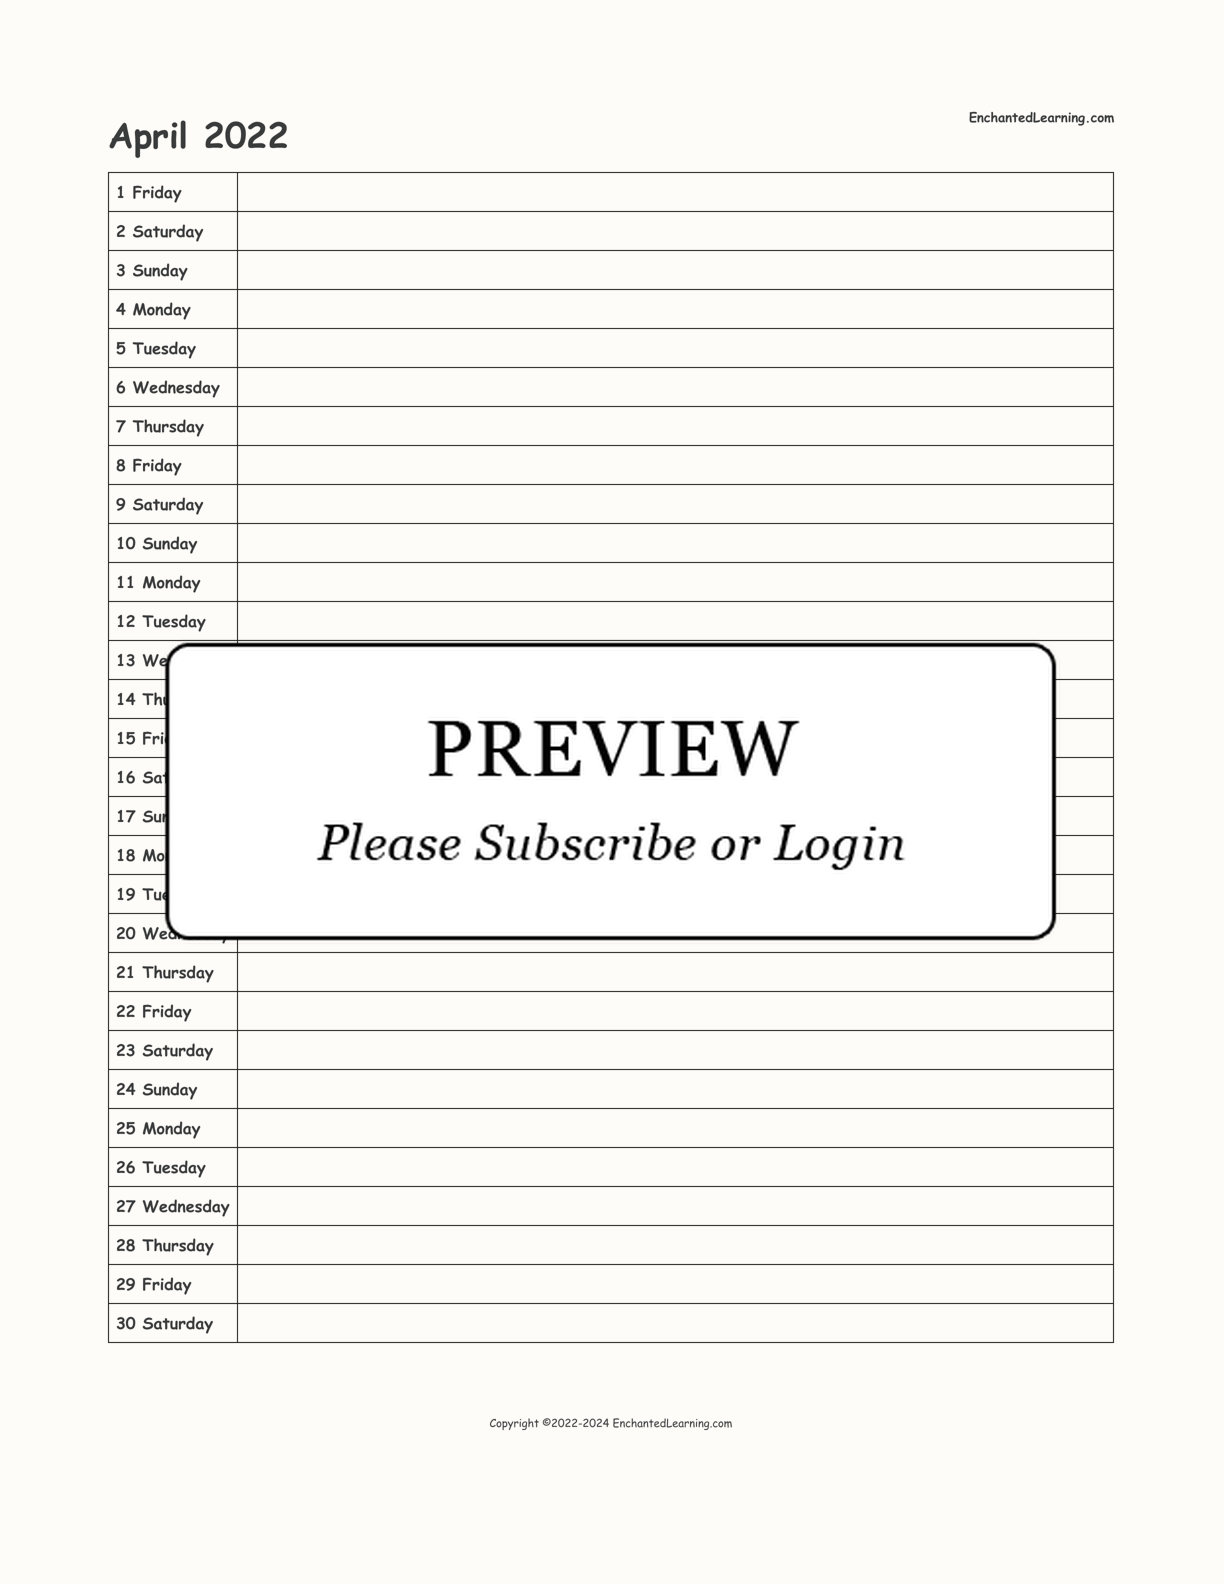 April 2022 Calendar interactive printout page 1